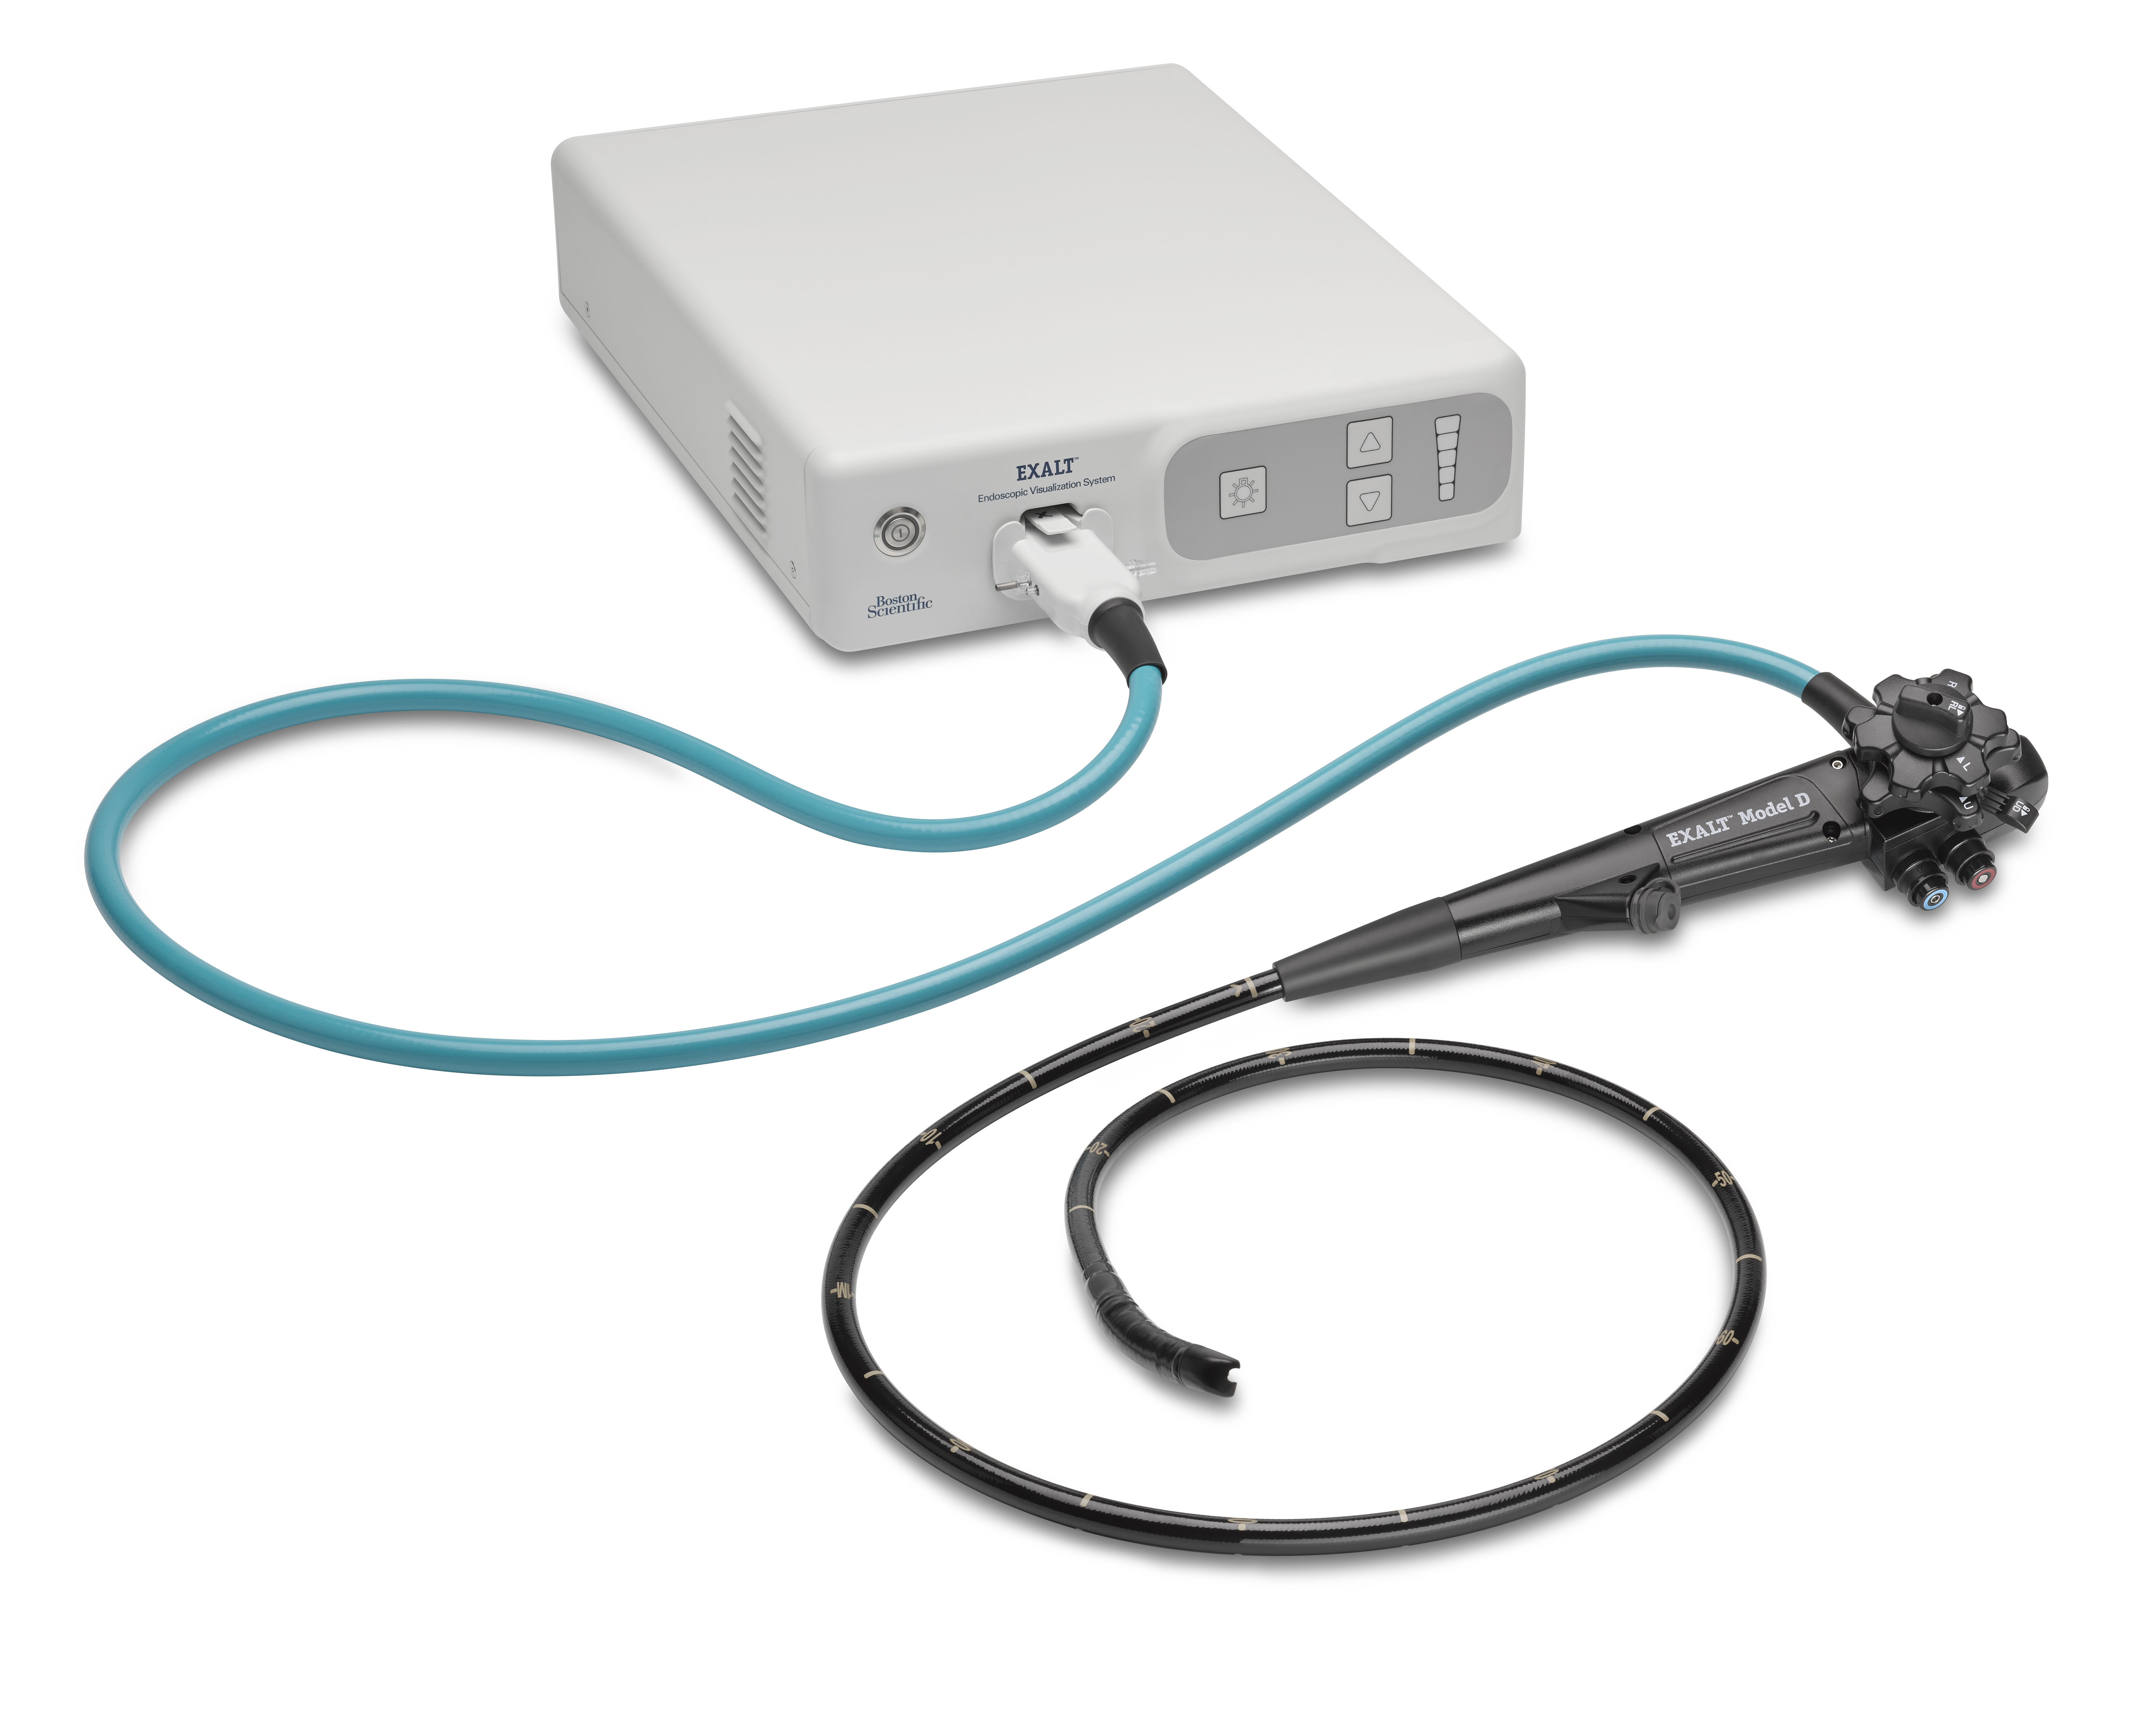 EXALT Model D Single-Use Duodenoscope, Generation 3 with EXALT Controller